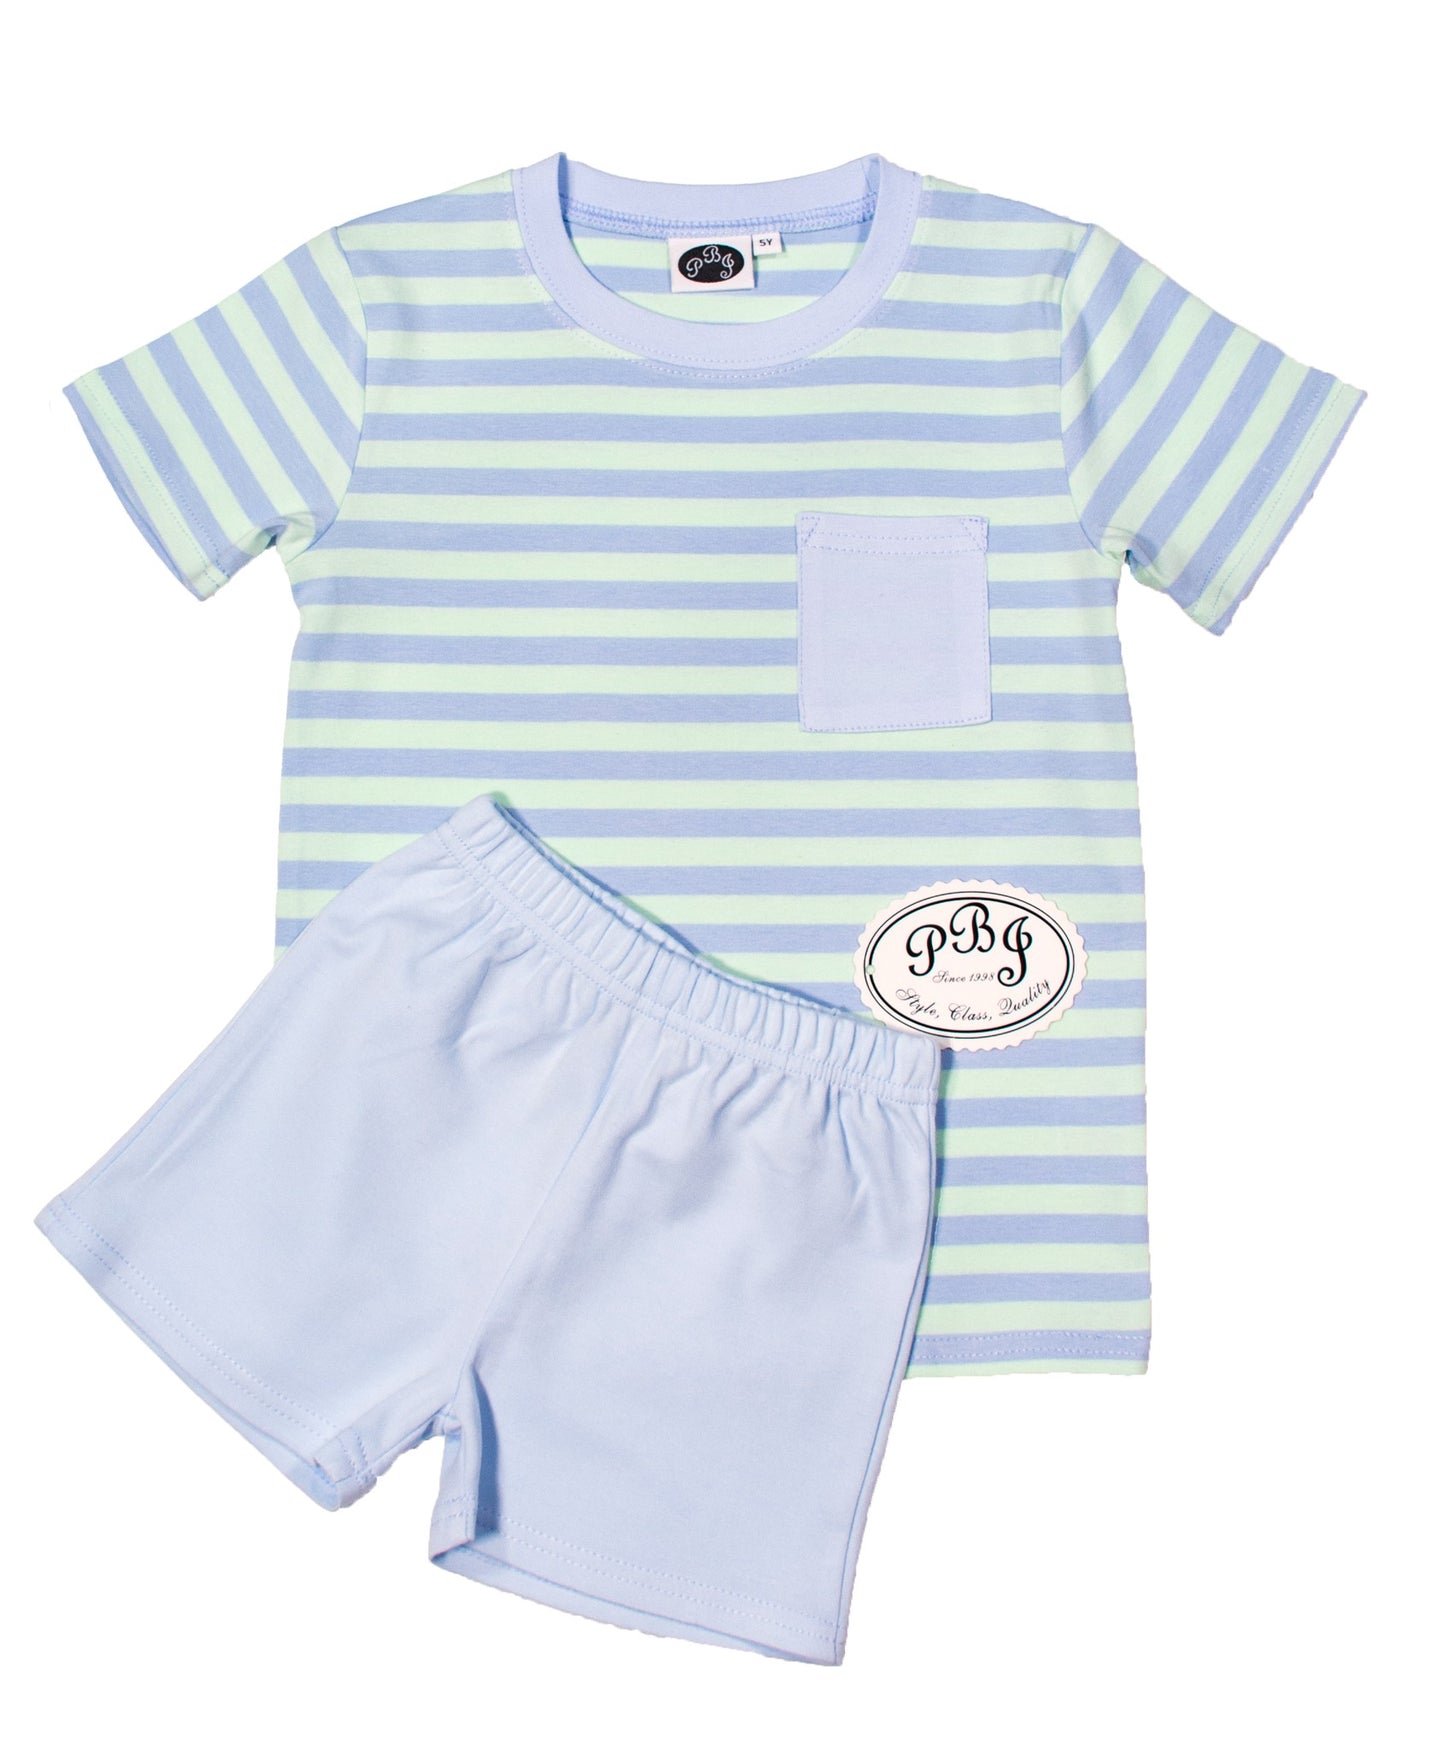 Seaside Stripes Pocket shirt w/Solid Blue